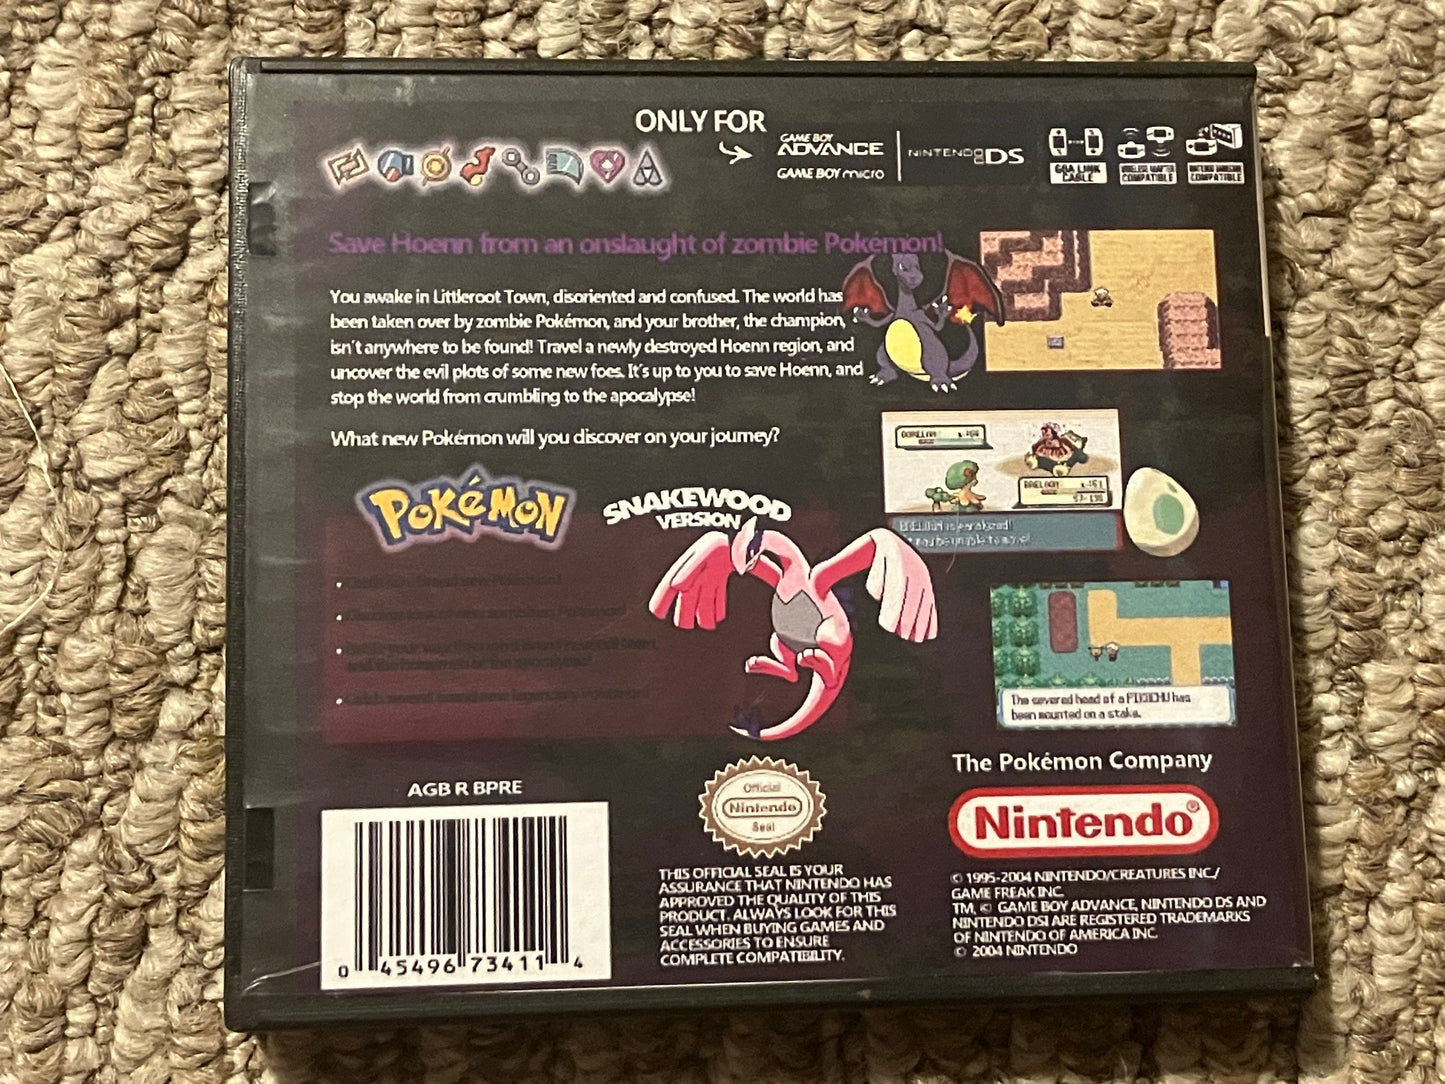 Pokemon Snakewood Version Nintendo Game Boy Advance Video Game